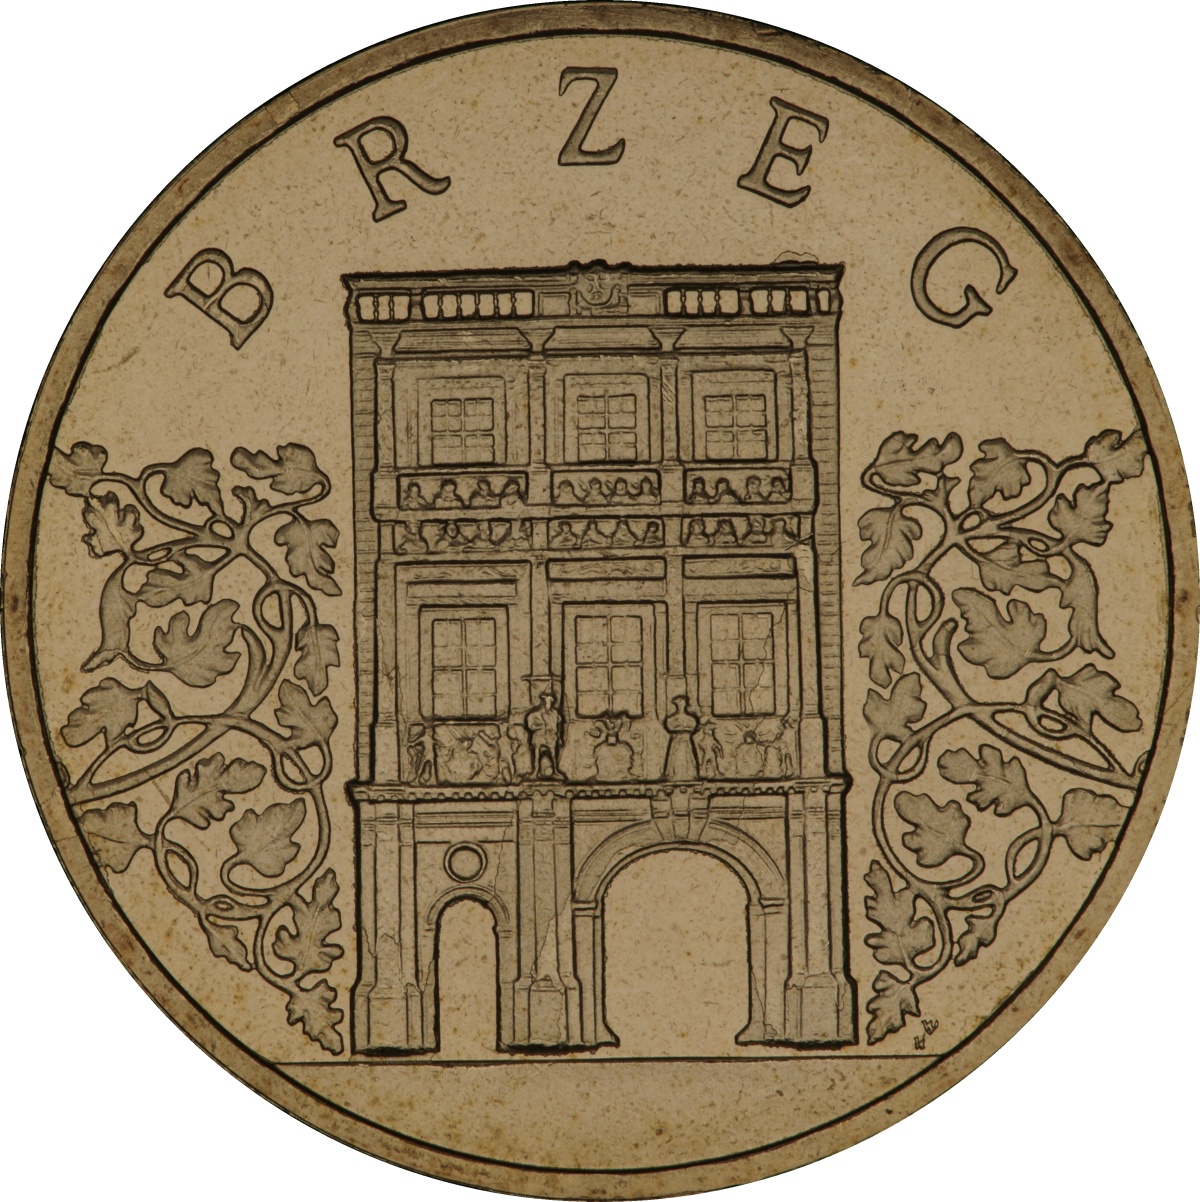 2zl-brzeg-rewers-monety